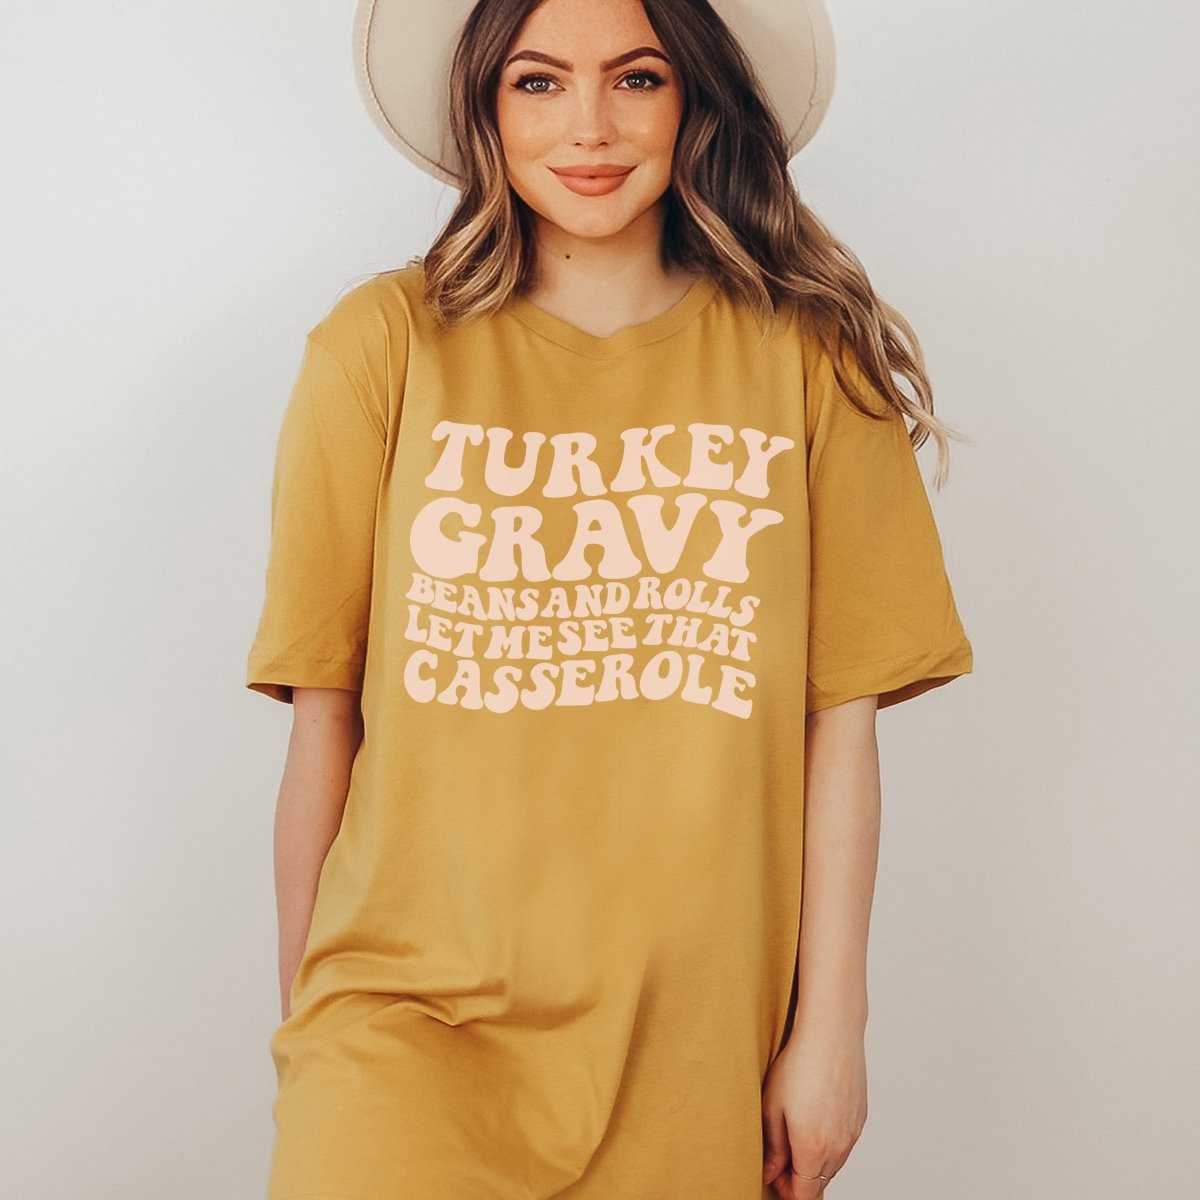 Turkey Gravy Wholesale Tee - Limeberry Designs